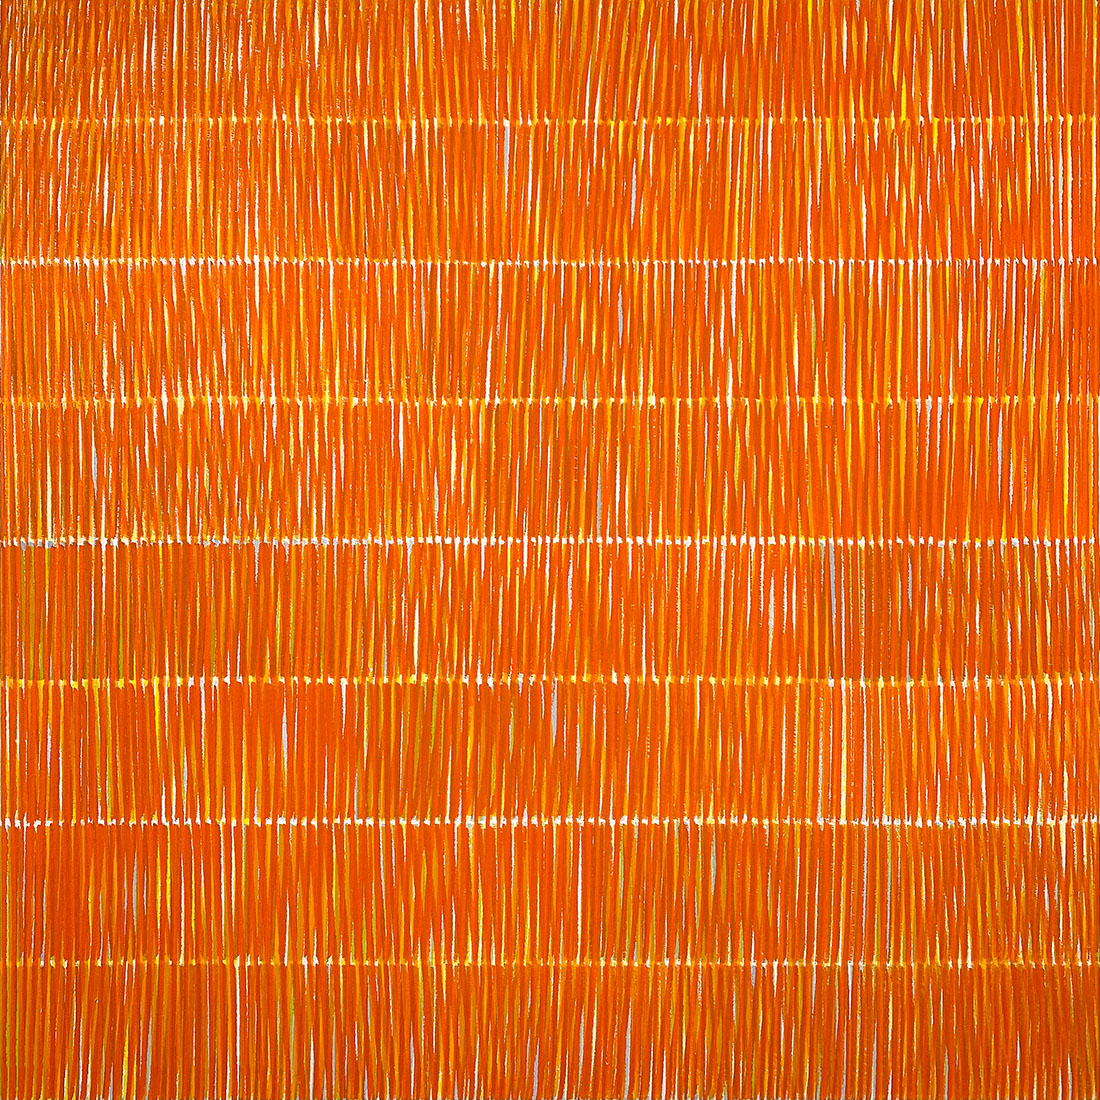 Nikola Dimitrov, FarbKlang Bewegt I, 2021, Pigmente, Bindemittel auf Leinwand, 80 × 80 cm